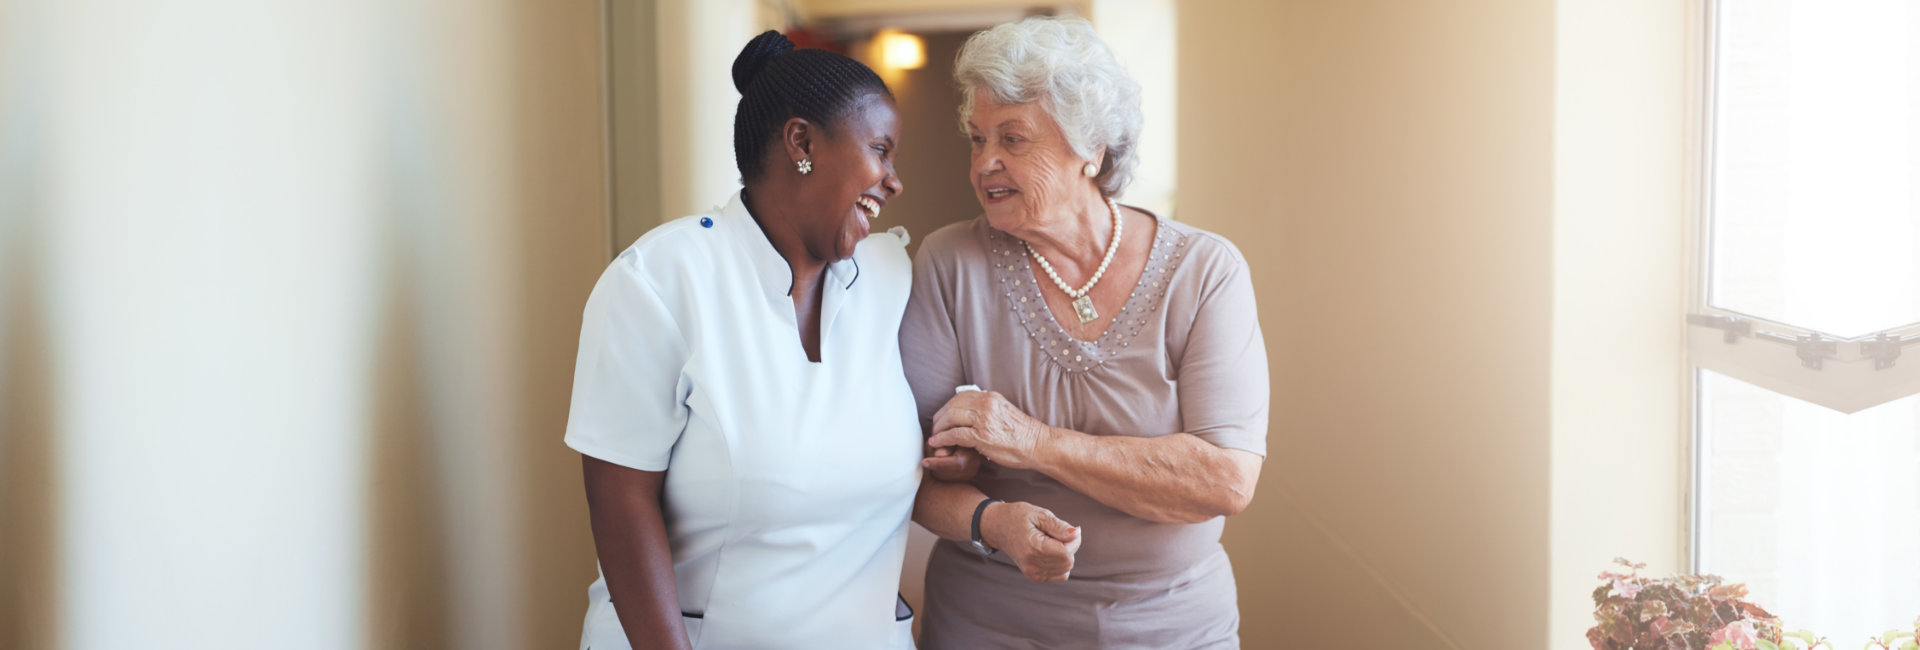 nurse and senior woman having a conversation while walking at the hallway